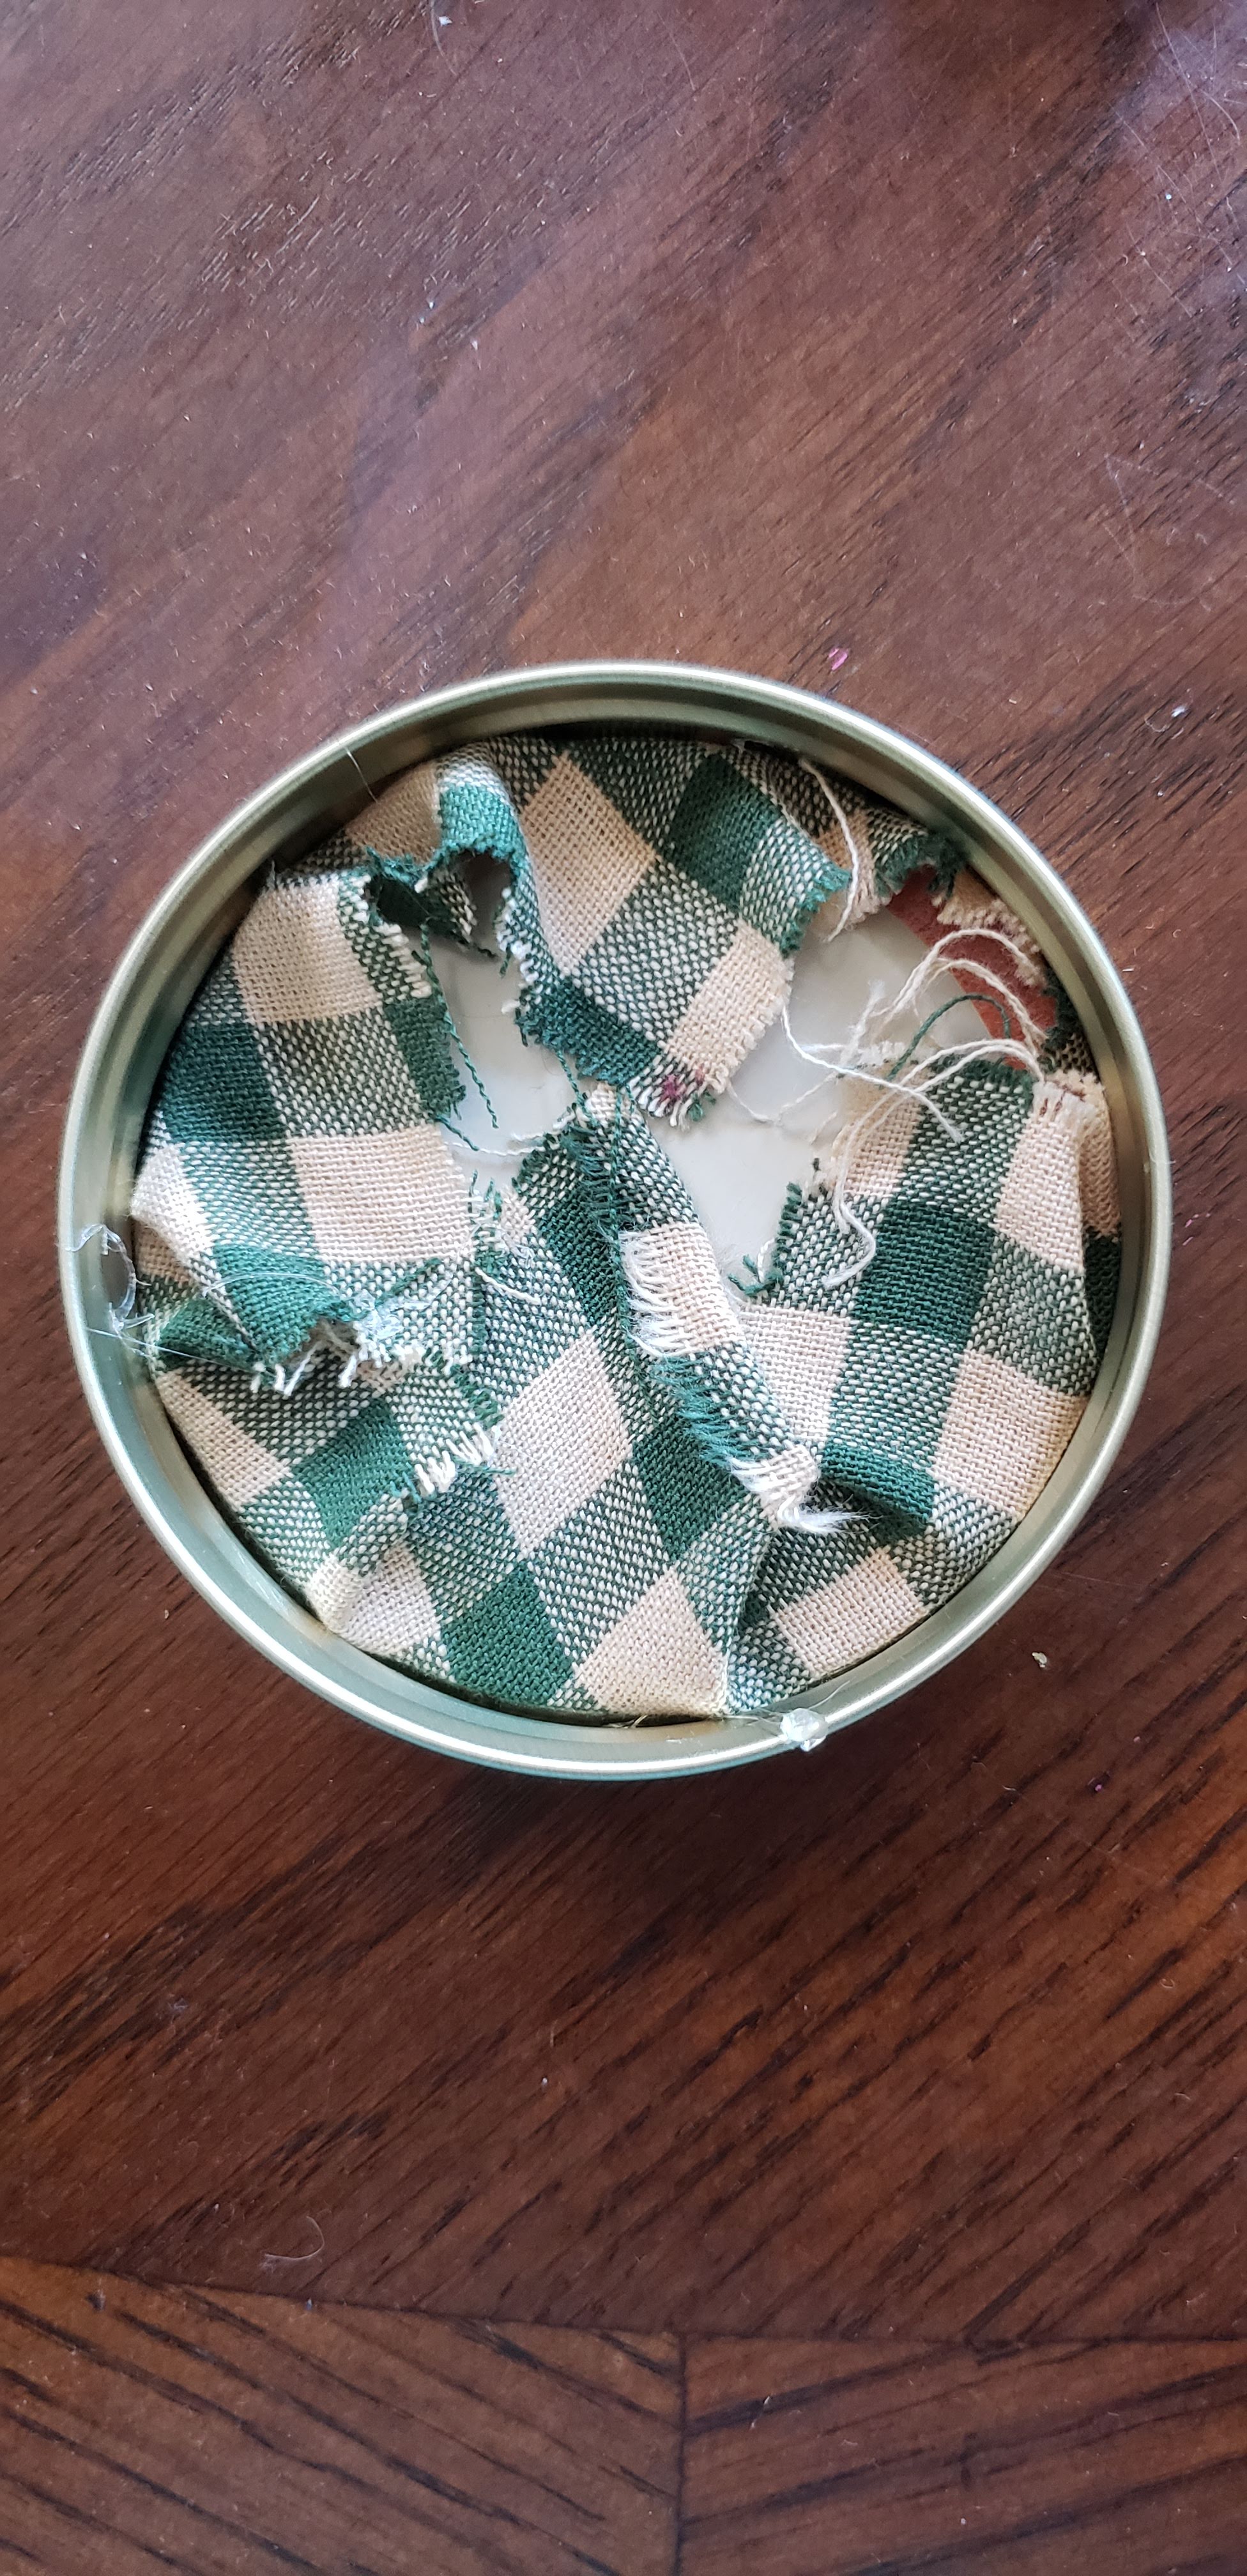 step2 - fold the fabric over the mason jar lid and glue